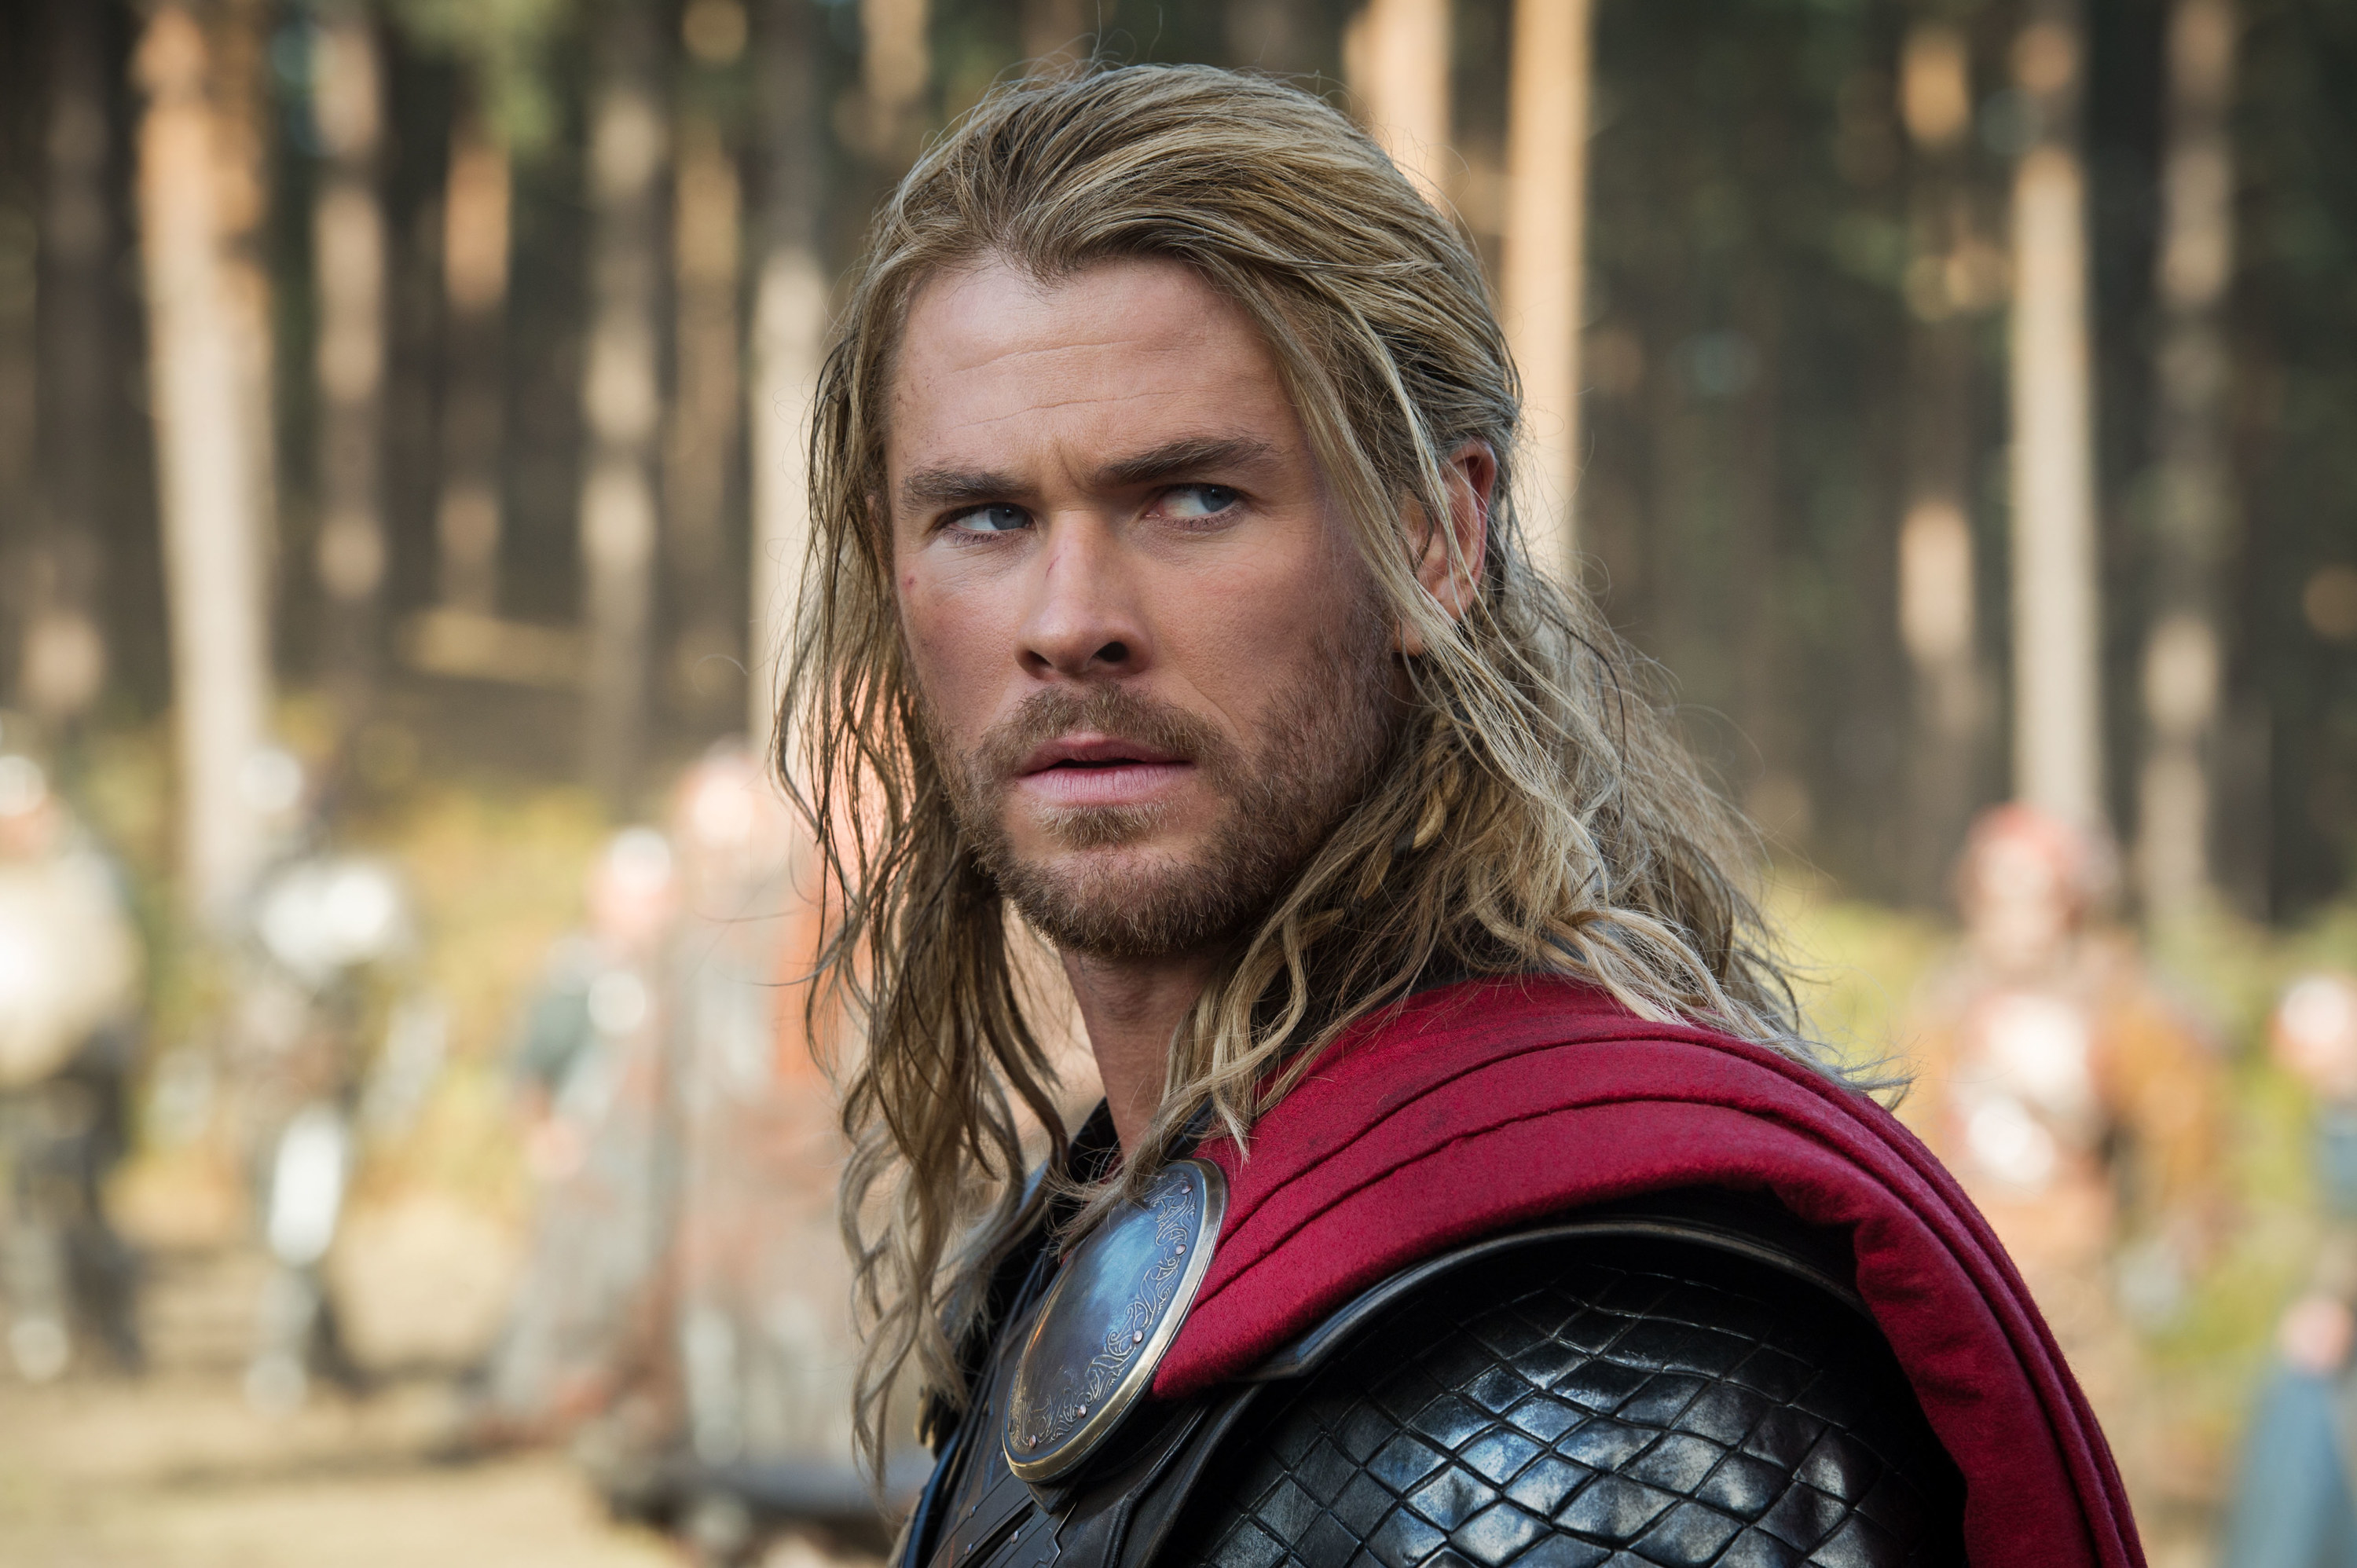 Chris in full costume as Thor